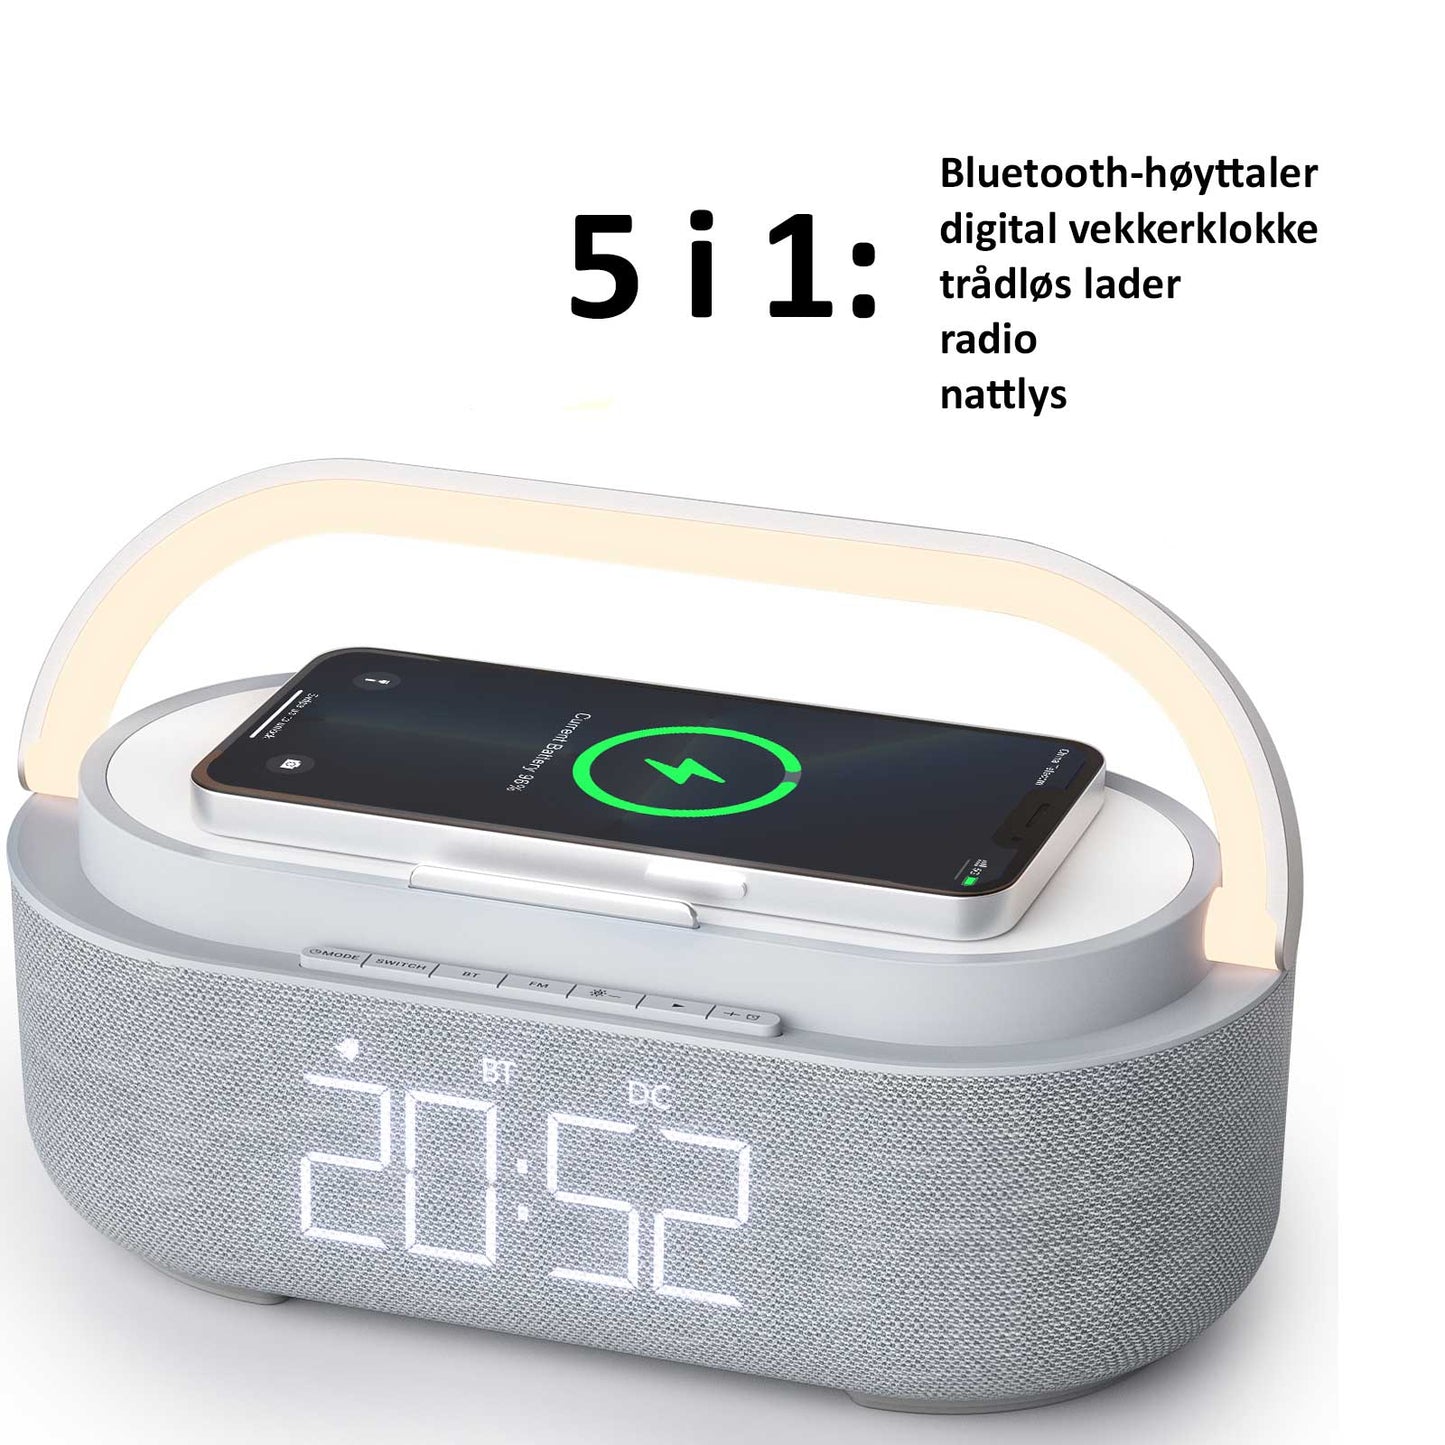 5 i 1: Bluetooth-høyttaler, digital vekkerklokke, trådløs lader, radio, nattlys